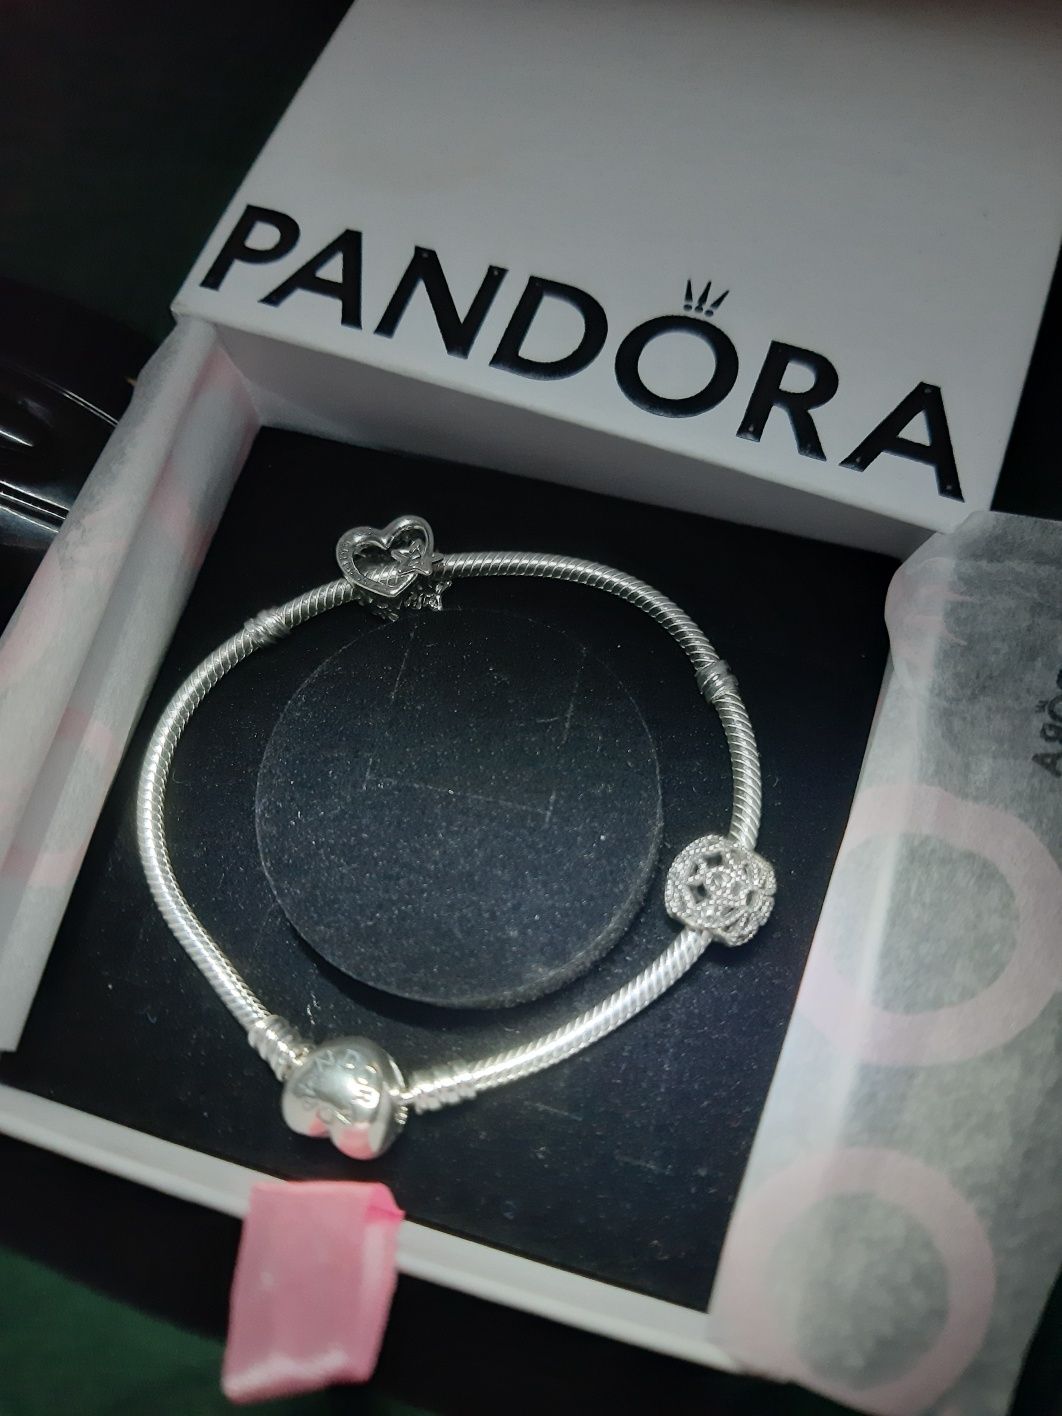 Pandora bransoletka